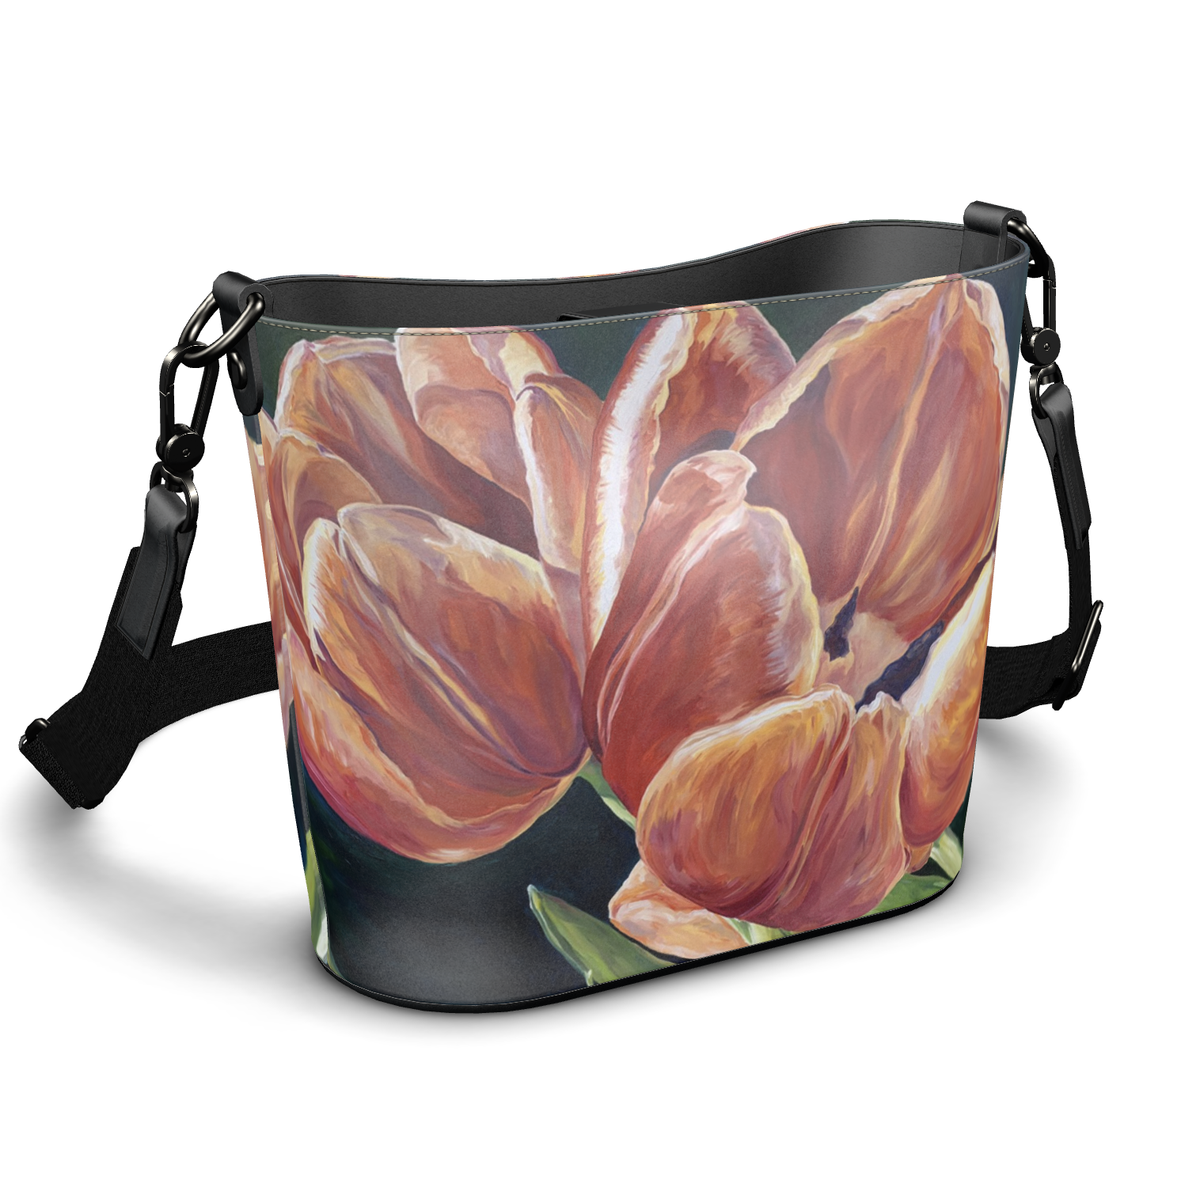 Tulip Sunset leather handbag created by Eileen Baumeister McIntyre for Garden of Silver. www.gardenofsilver.com